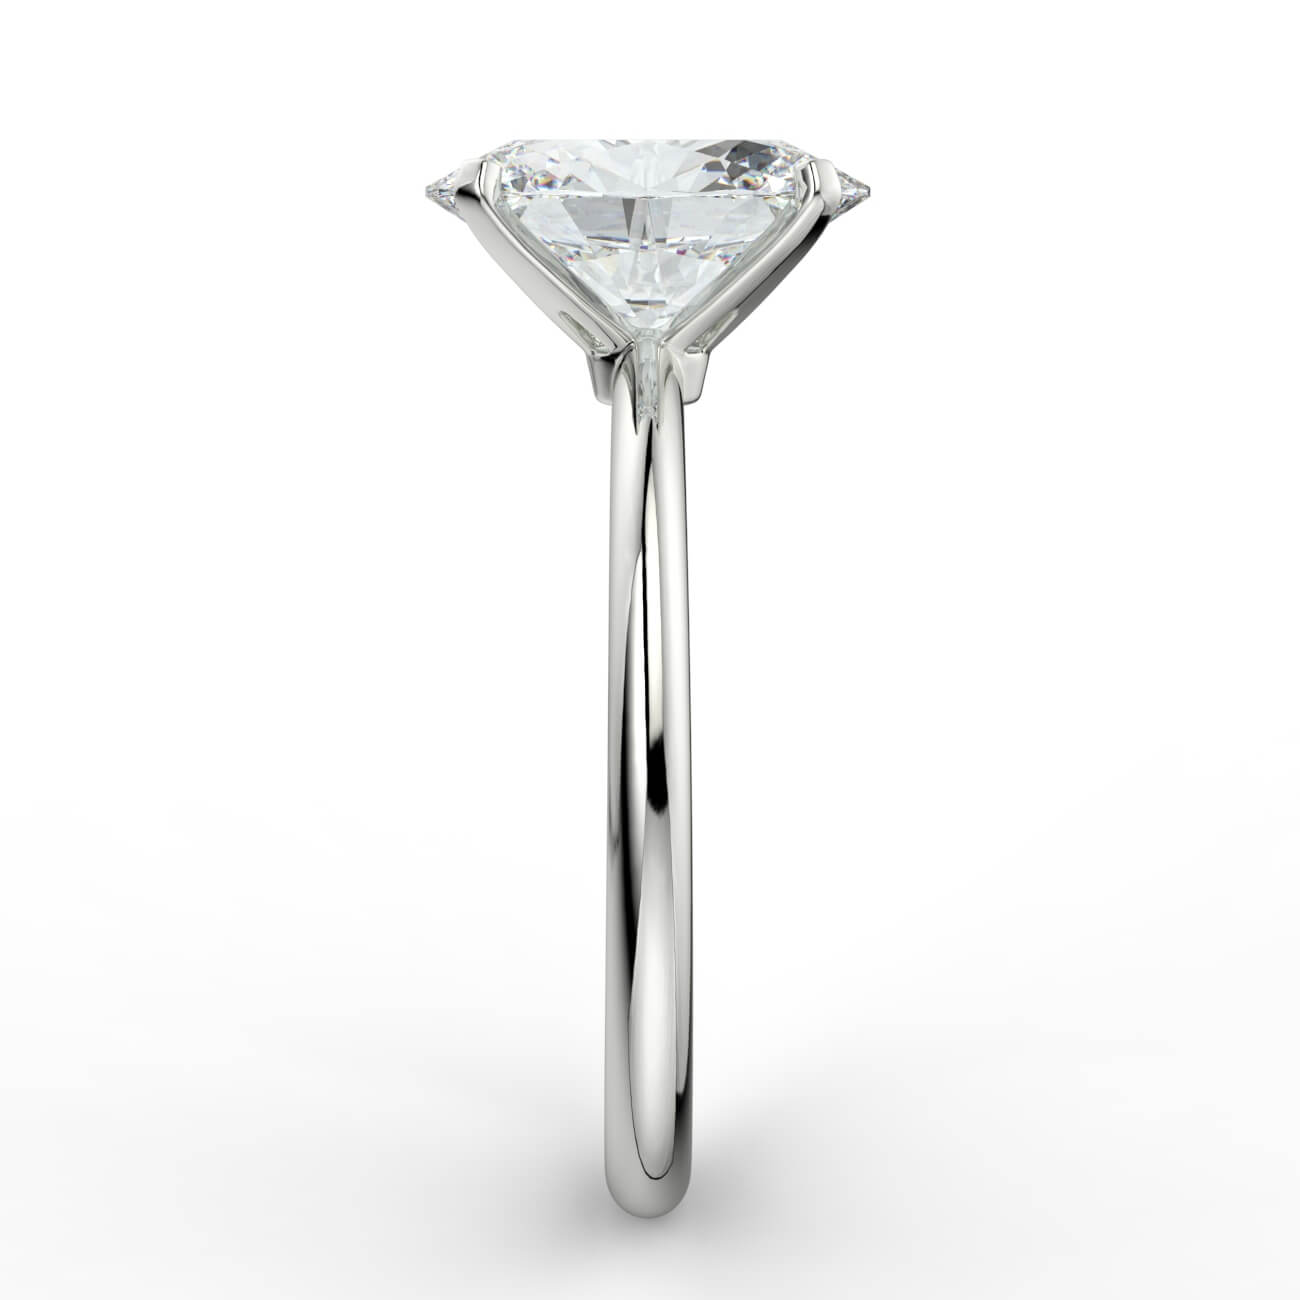 oval shape diamond solitaire ring in white gold - Australian Diamond Network